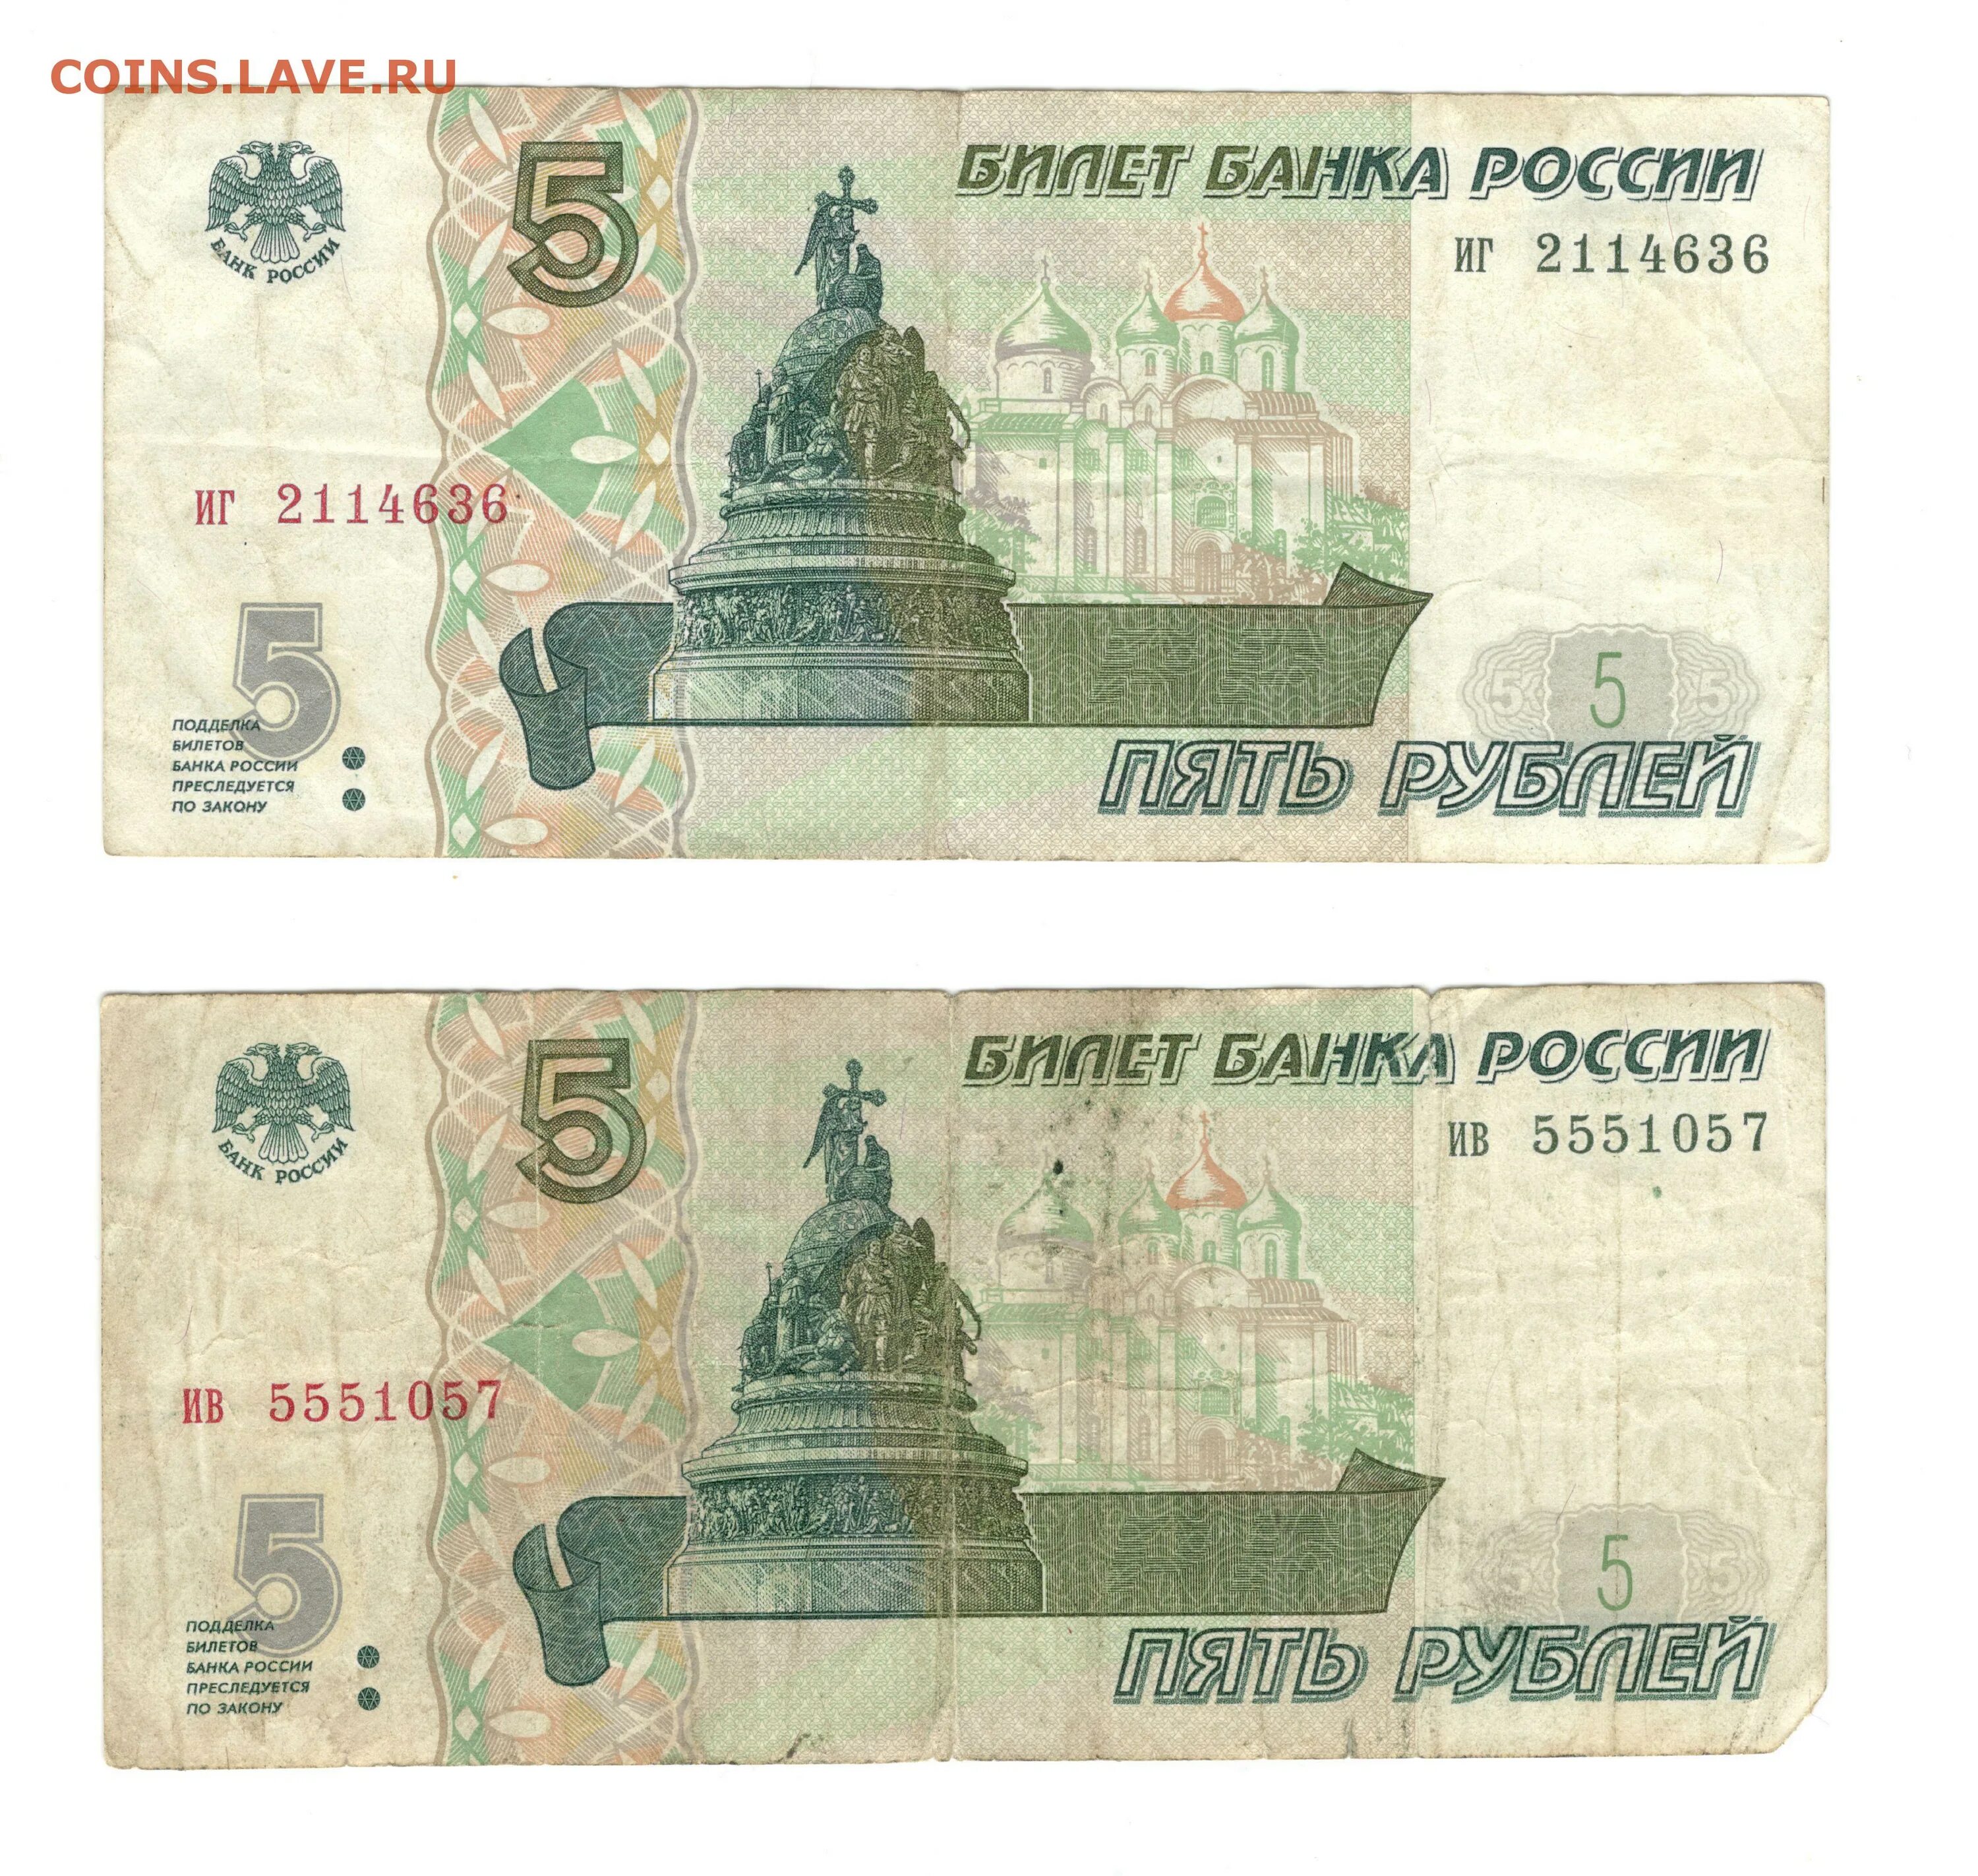 5 рублей 97. 5 Рублей сейчас бумажные. 5 Рублей 97 года бумажные. 5 Рублей России бумажные. Банкнота 5 рублей 1997.